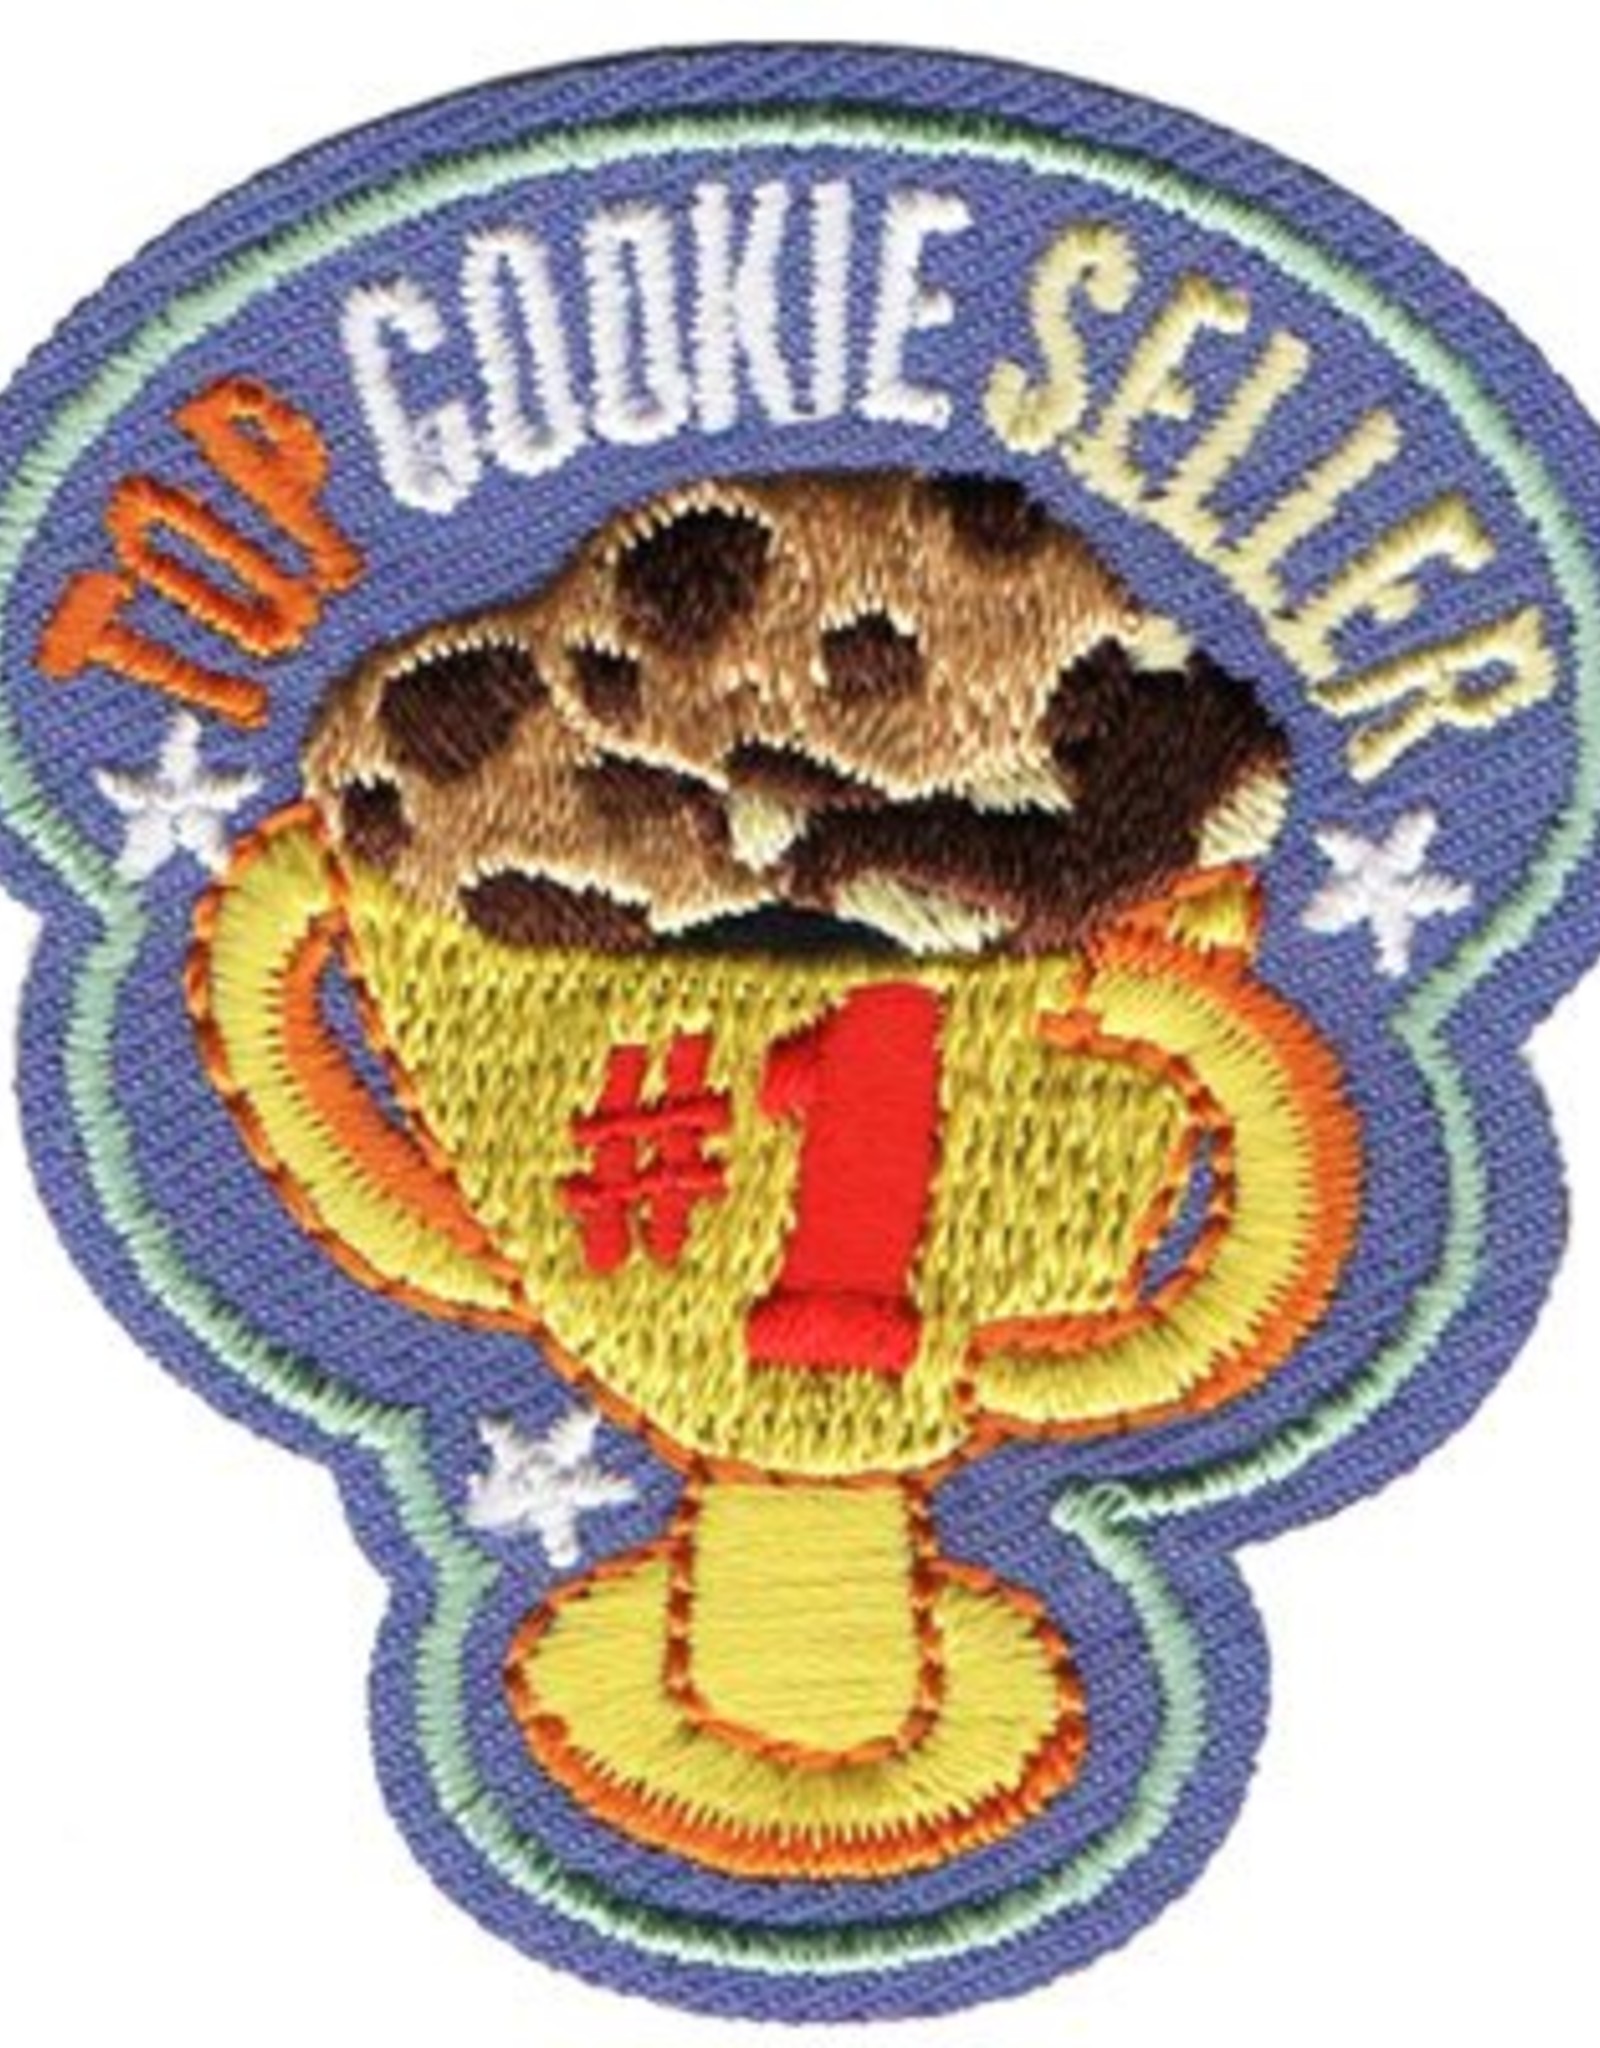 Advantage Emblem & Screen Prnt Top Cookie Seller Trophy Fun Patch